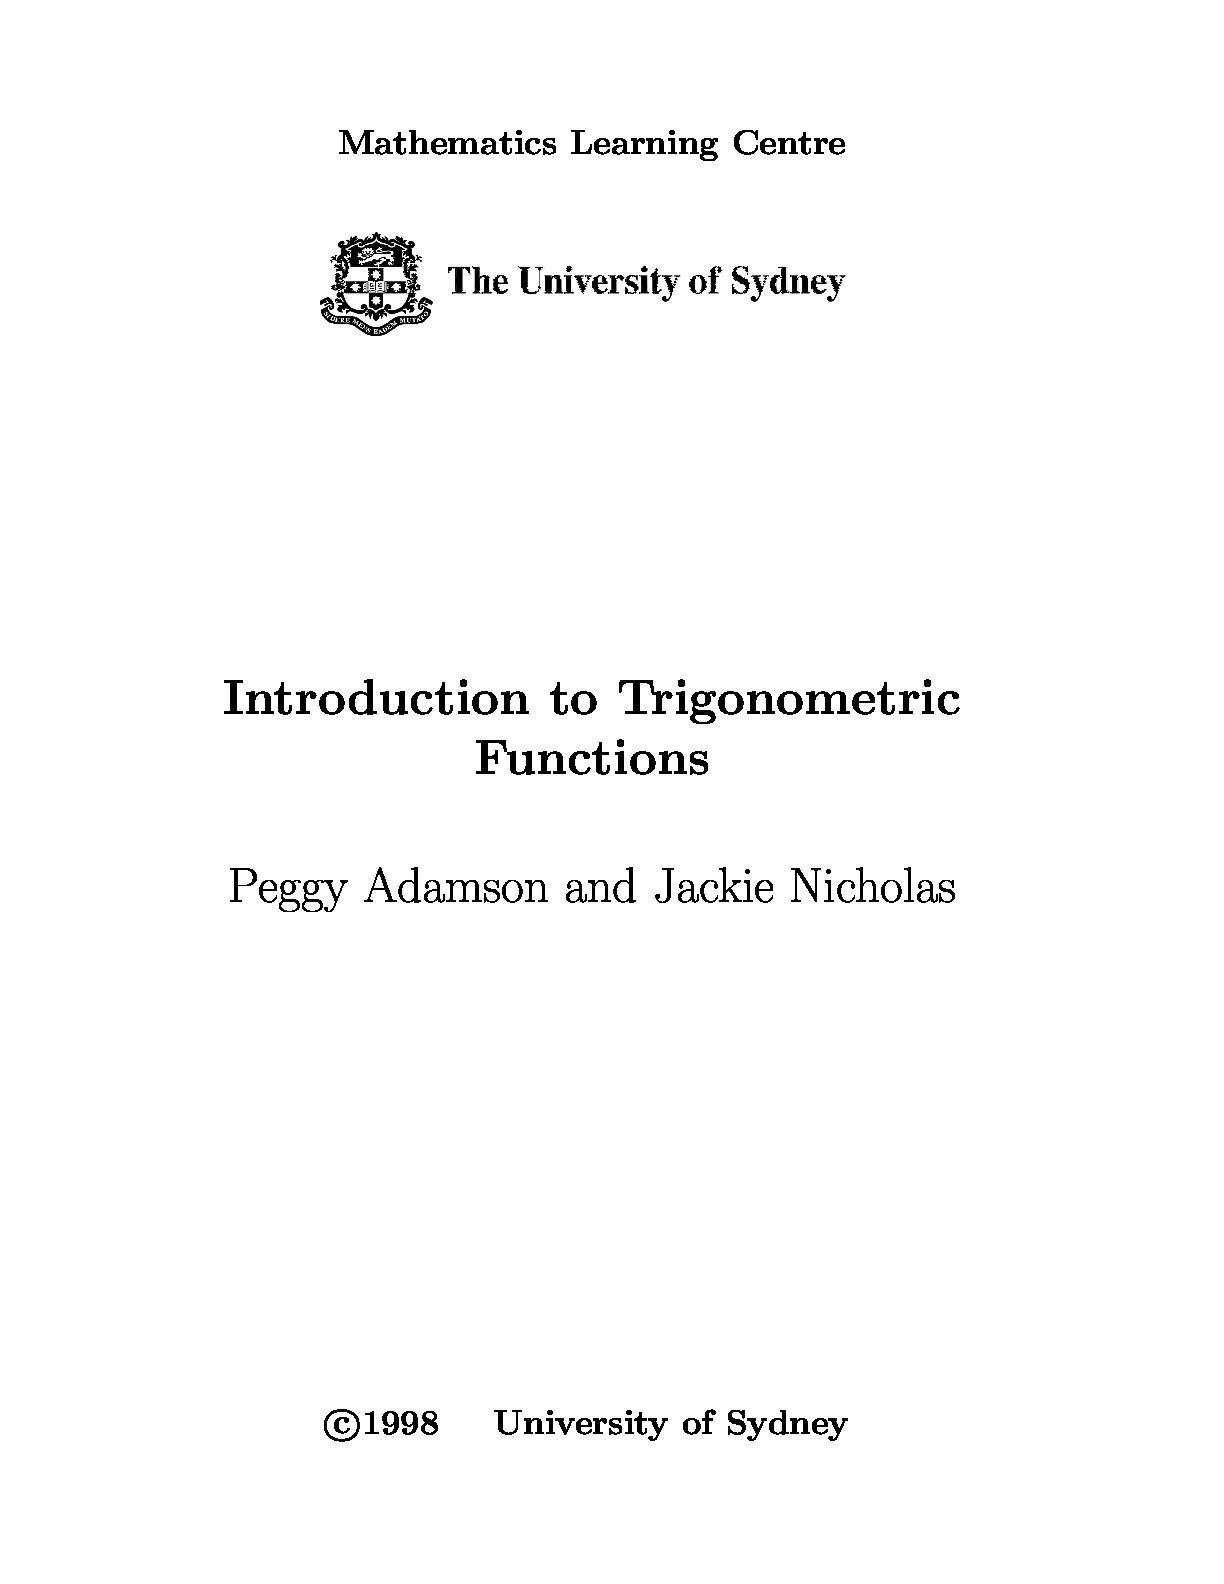 Intro_to_Trigonometric_Functions